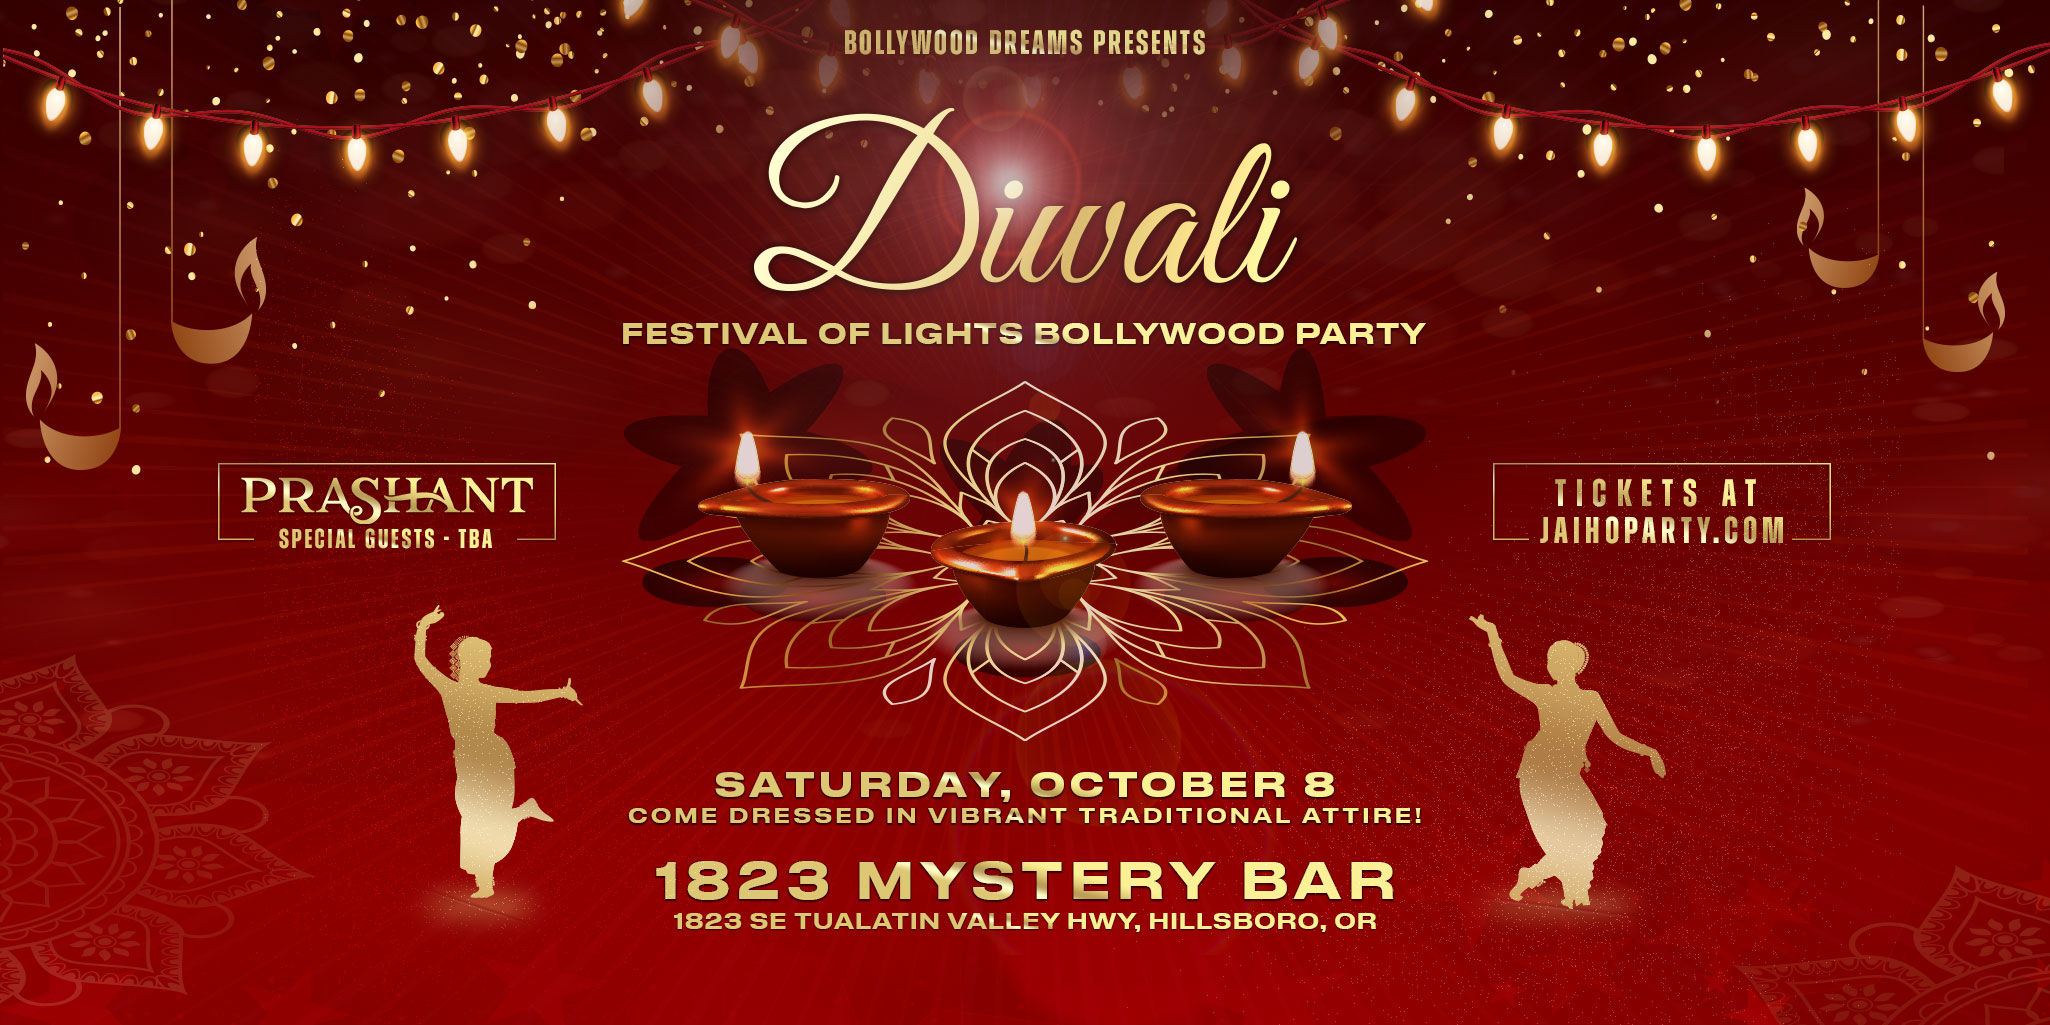 Hillsboro DIWALI Bollywood Party Thumbnail.jpg v2